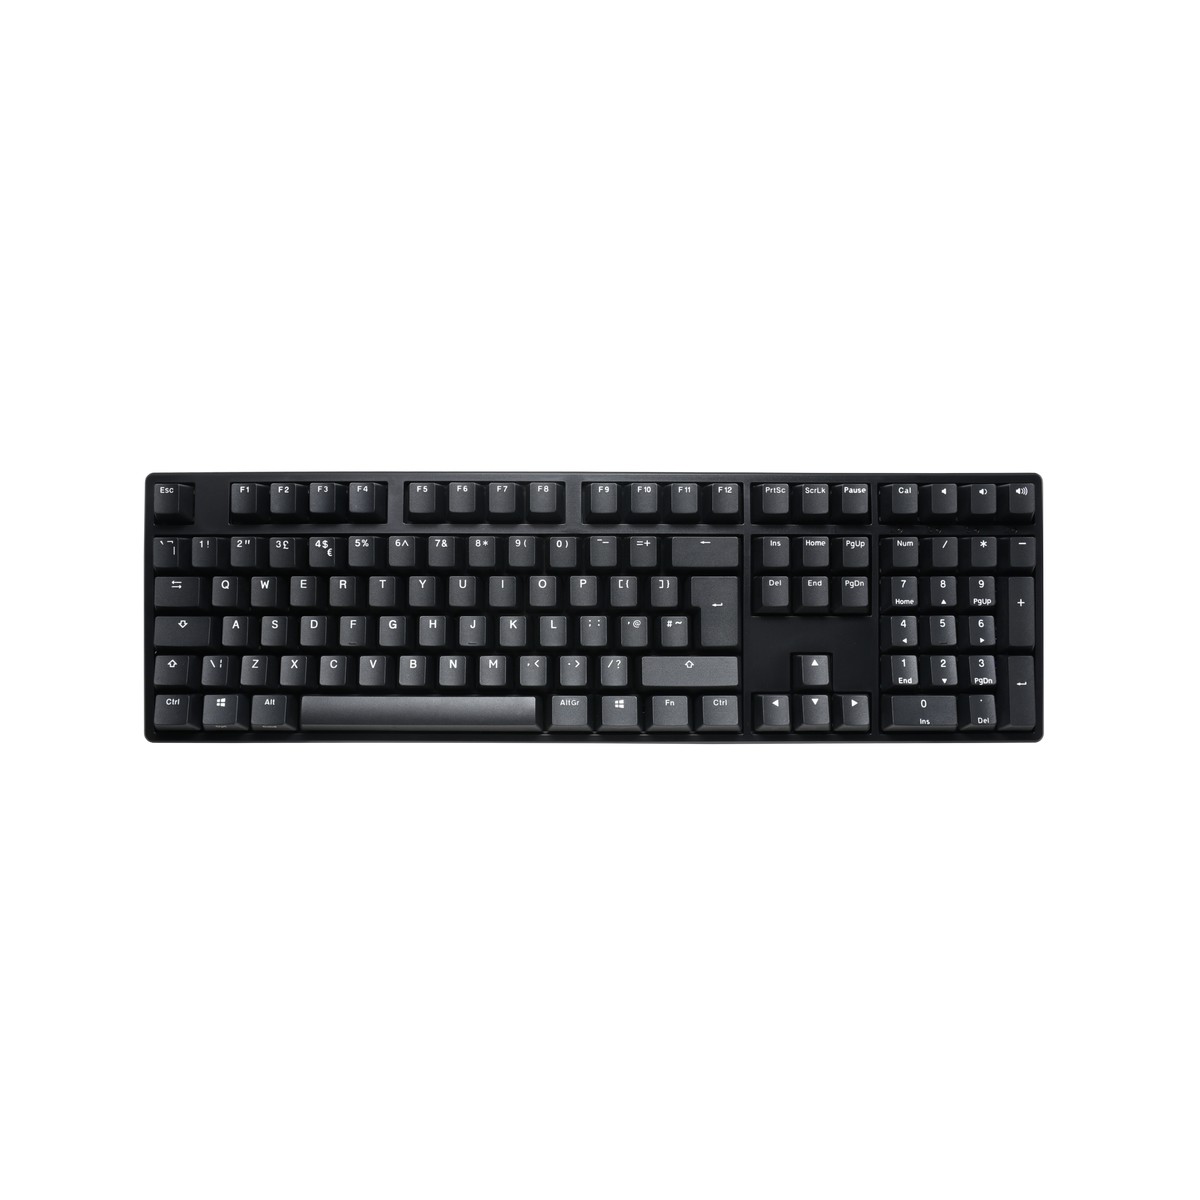 Ducky Origin USB Mechanical Gaming Keyboard Cherry MX Blue - Black UK Layout